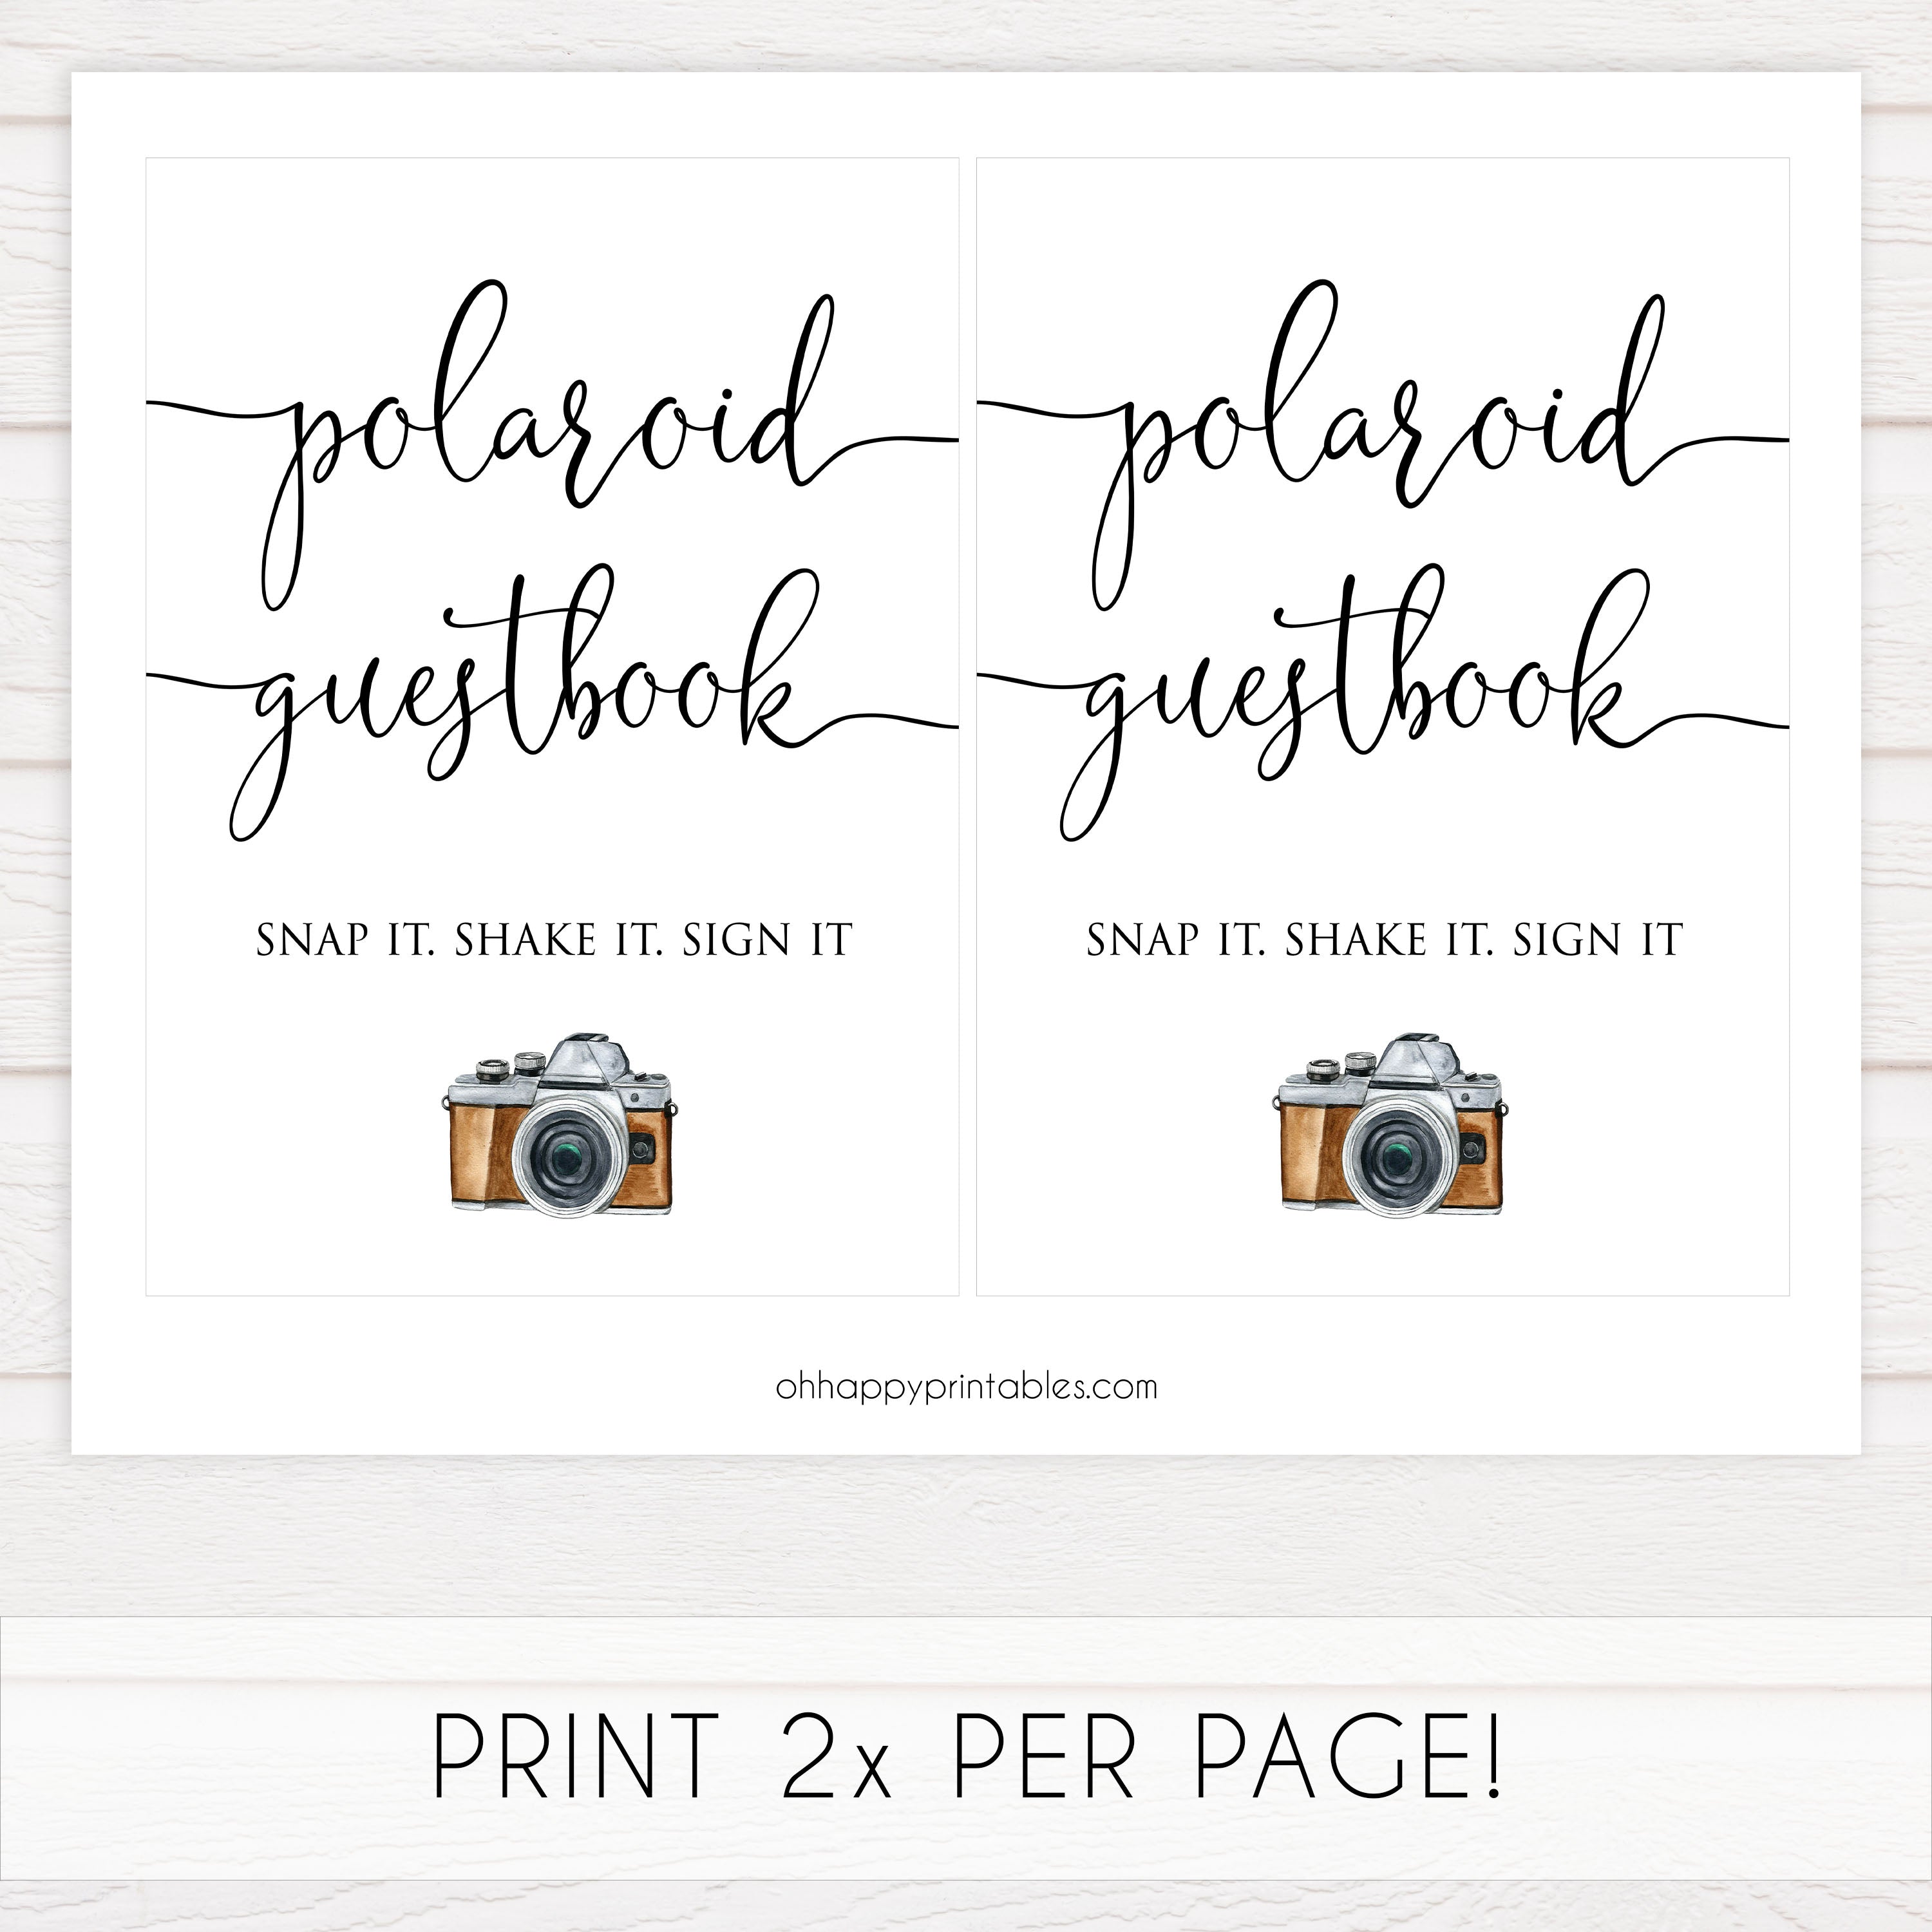 Polaroid guest book, Wedding & Party Ideas